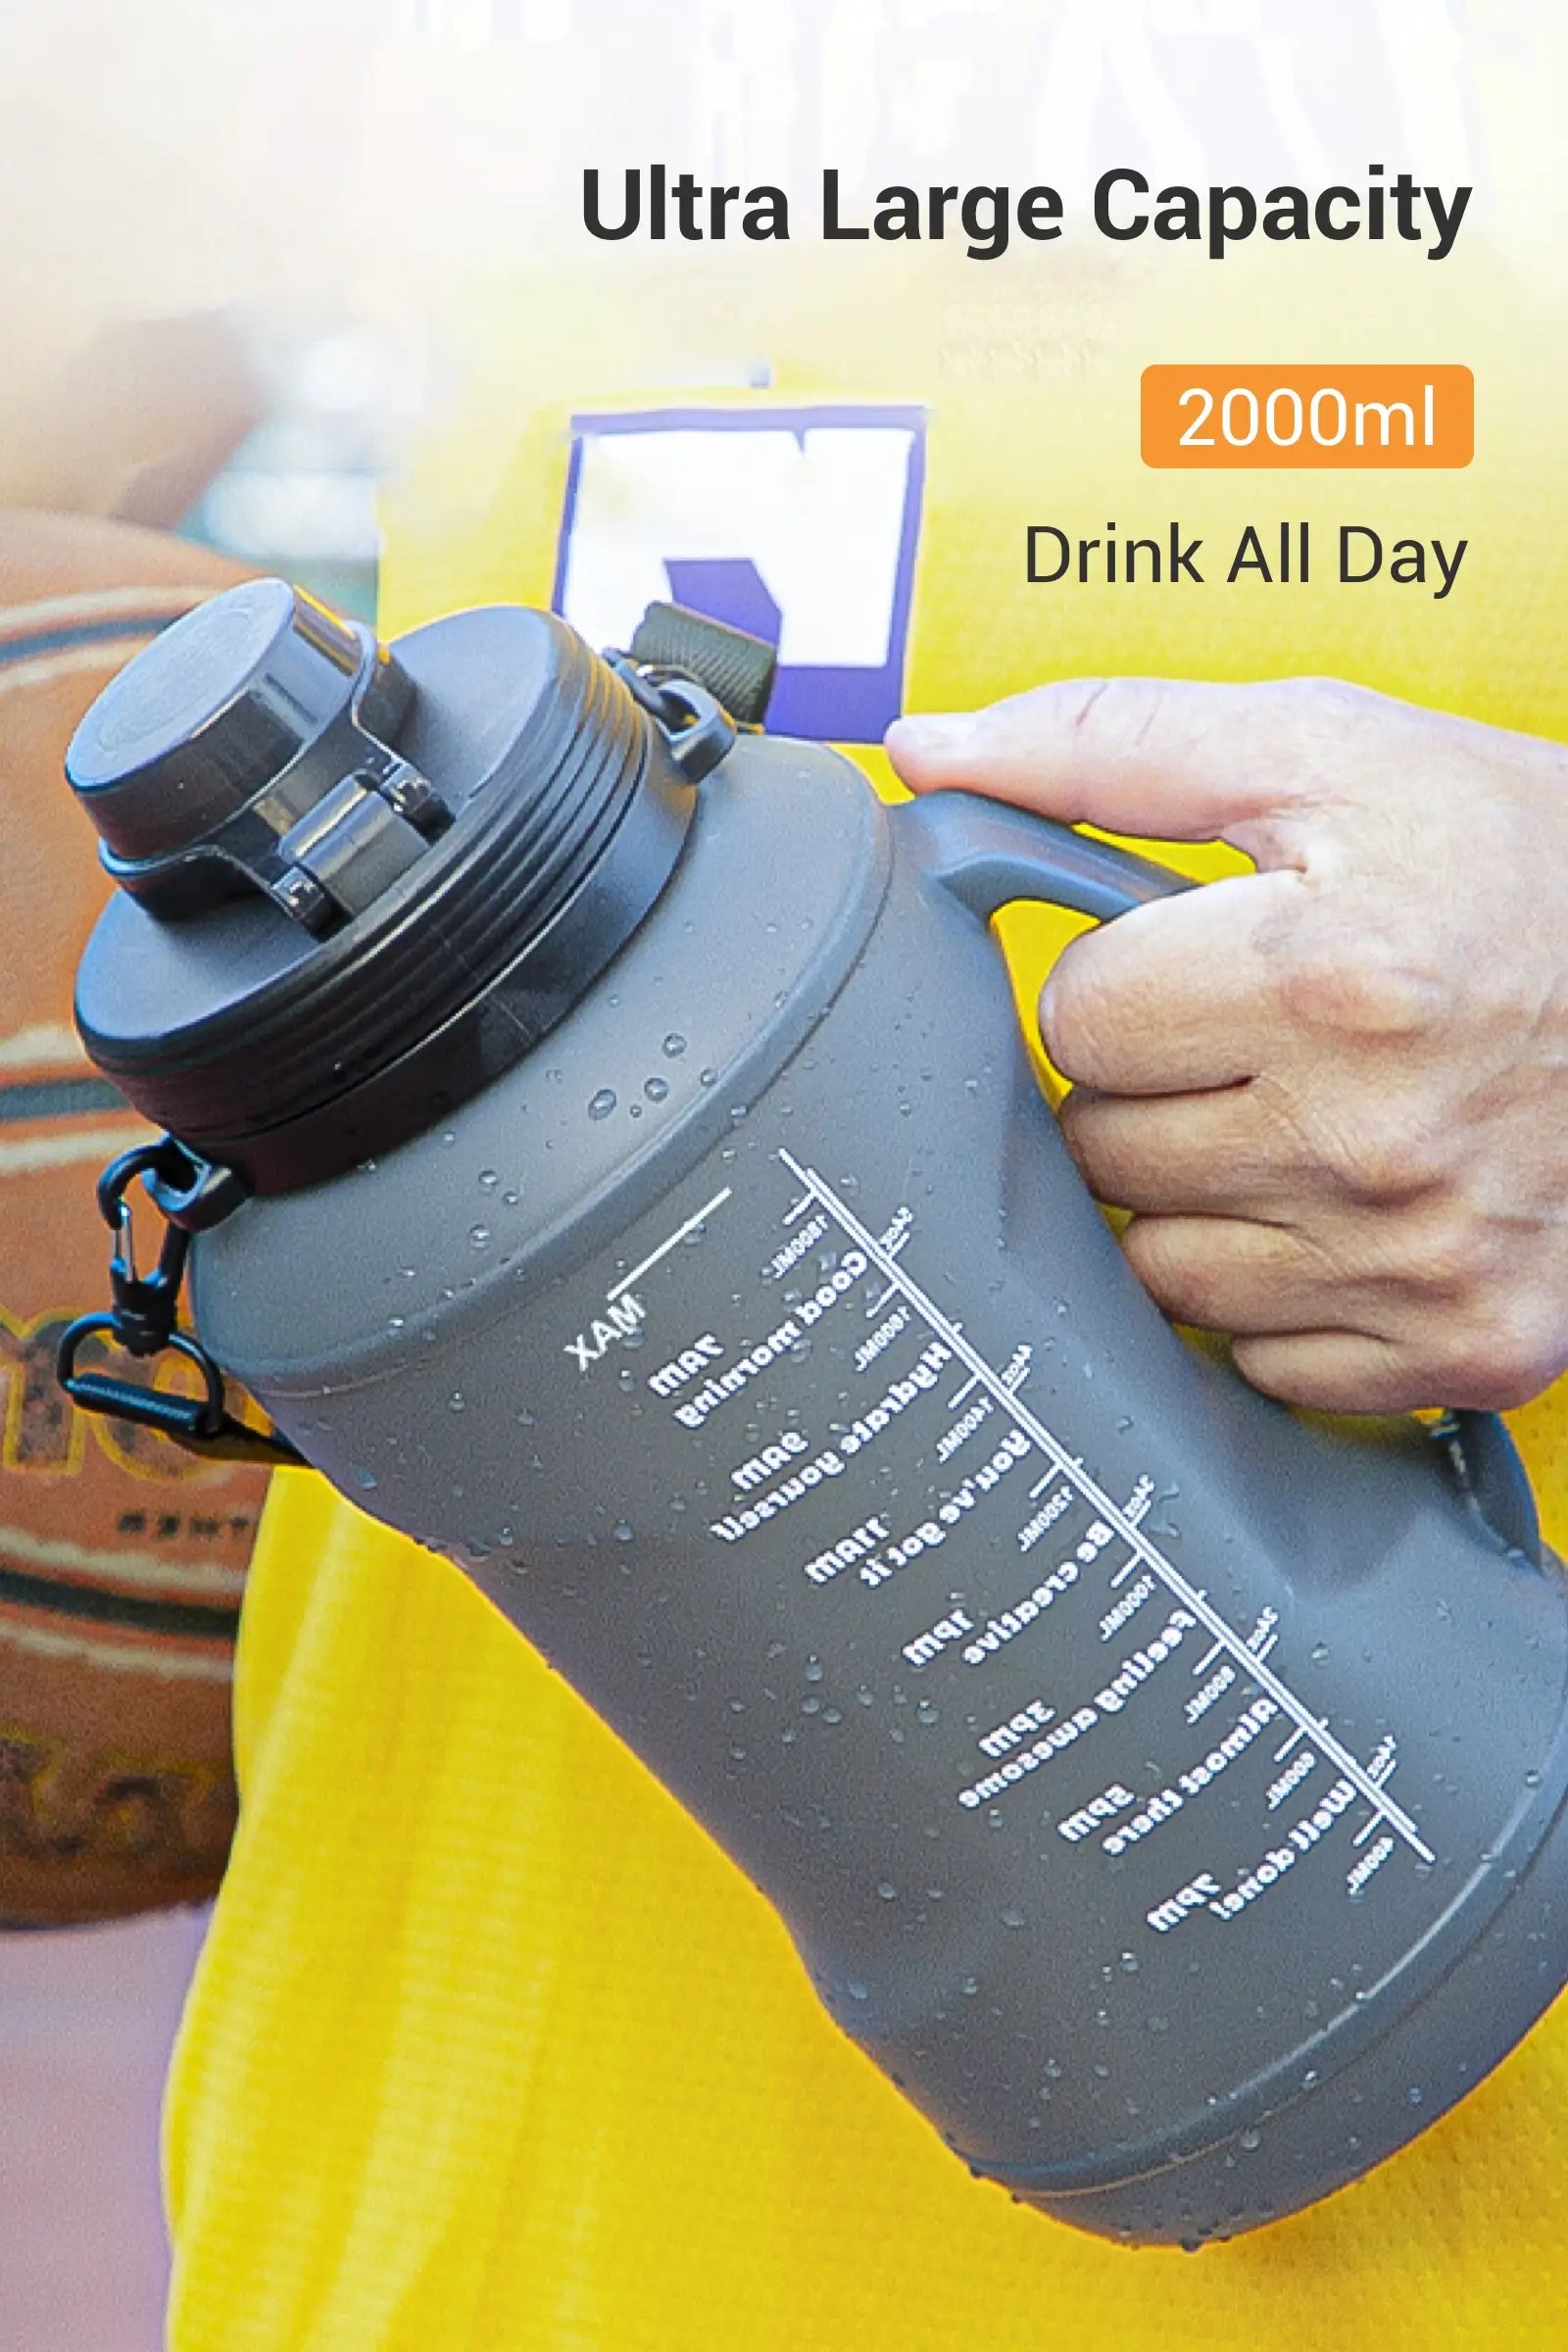 Ultragrote capaciteit 2000 ml, drink de hele dag